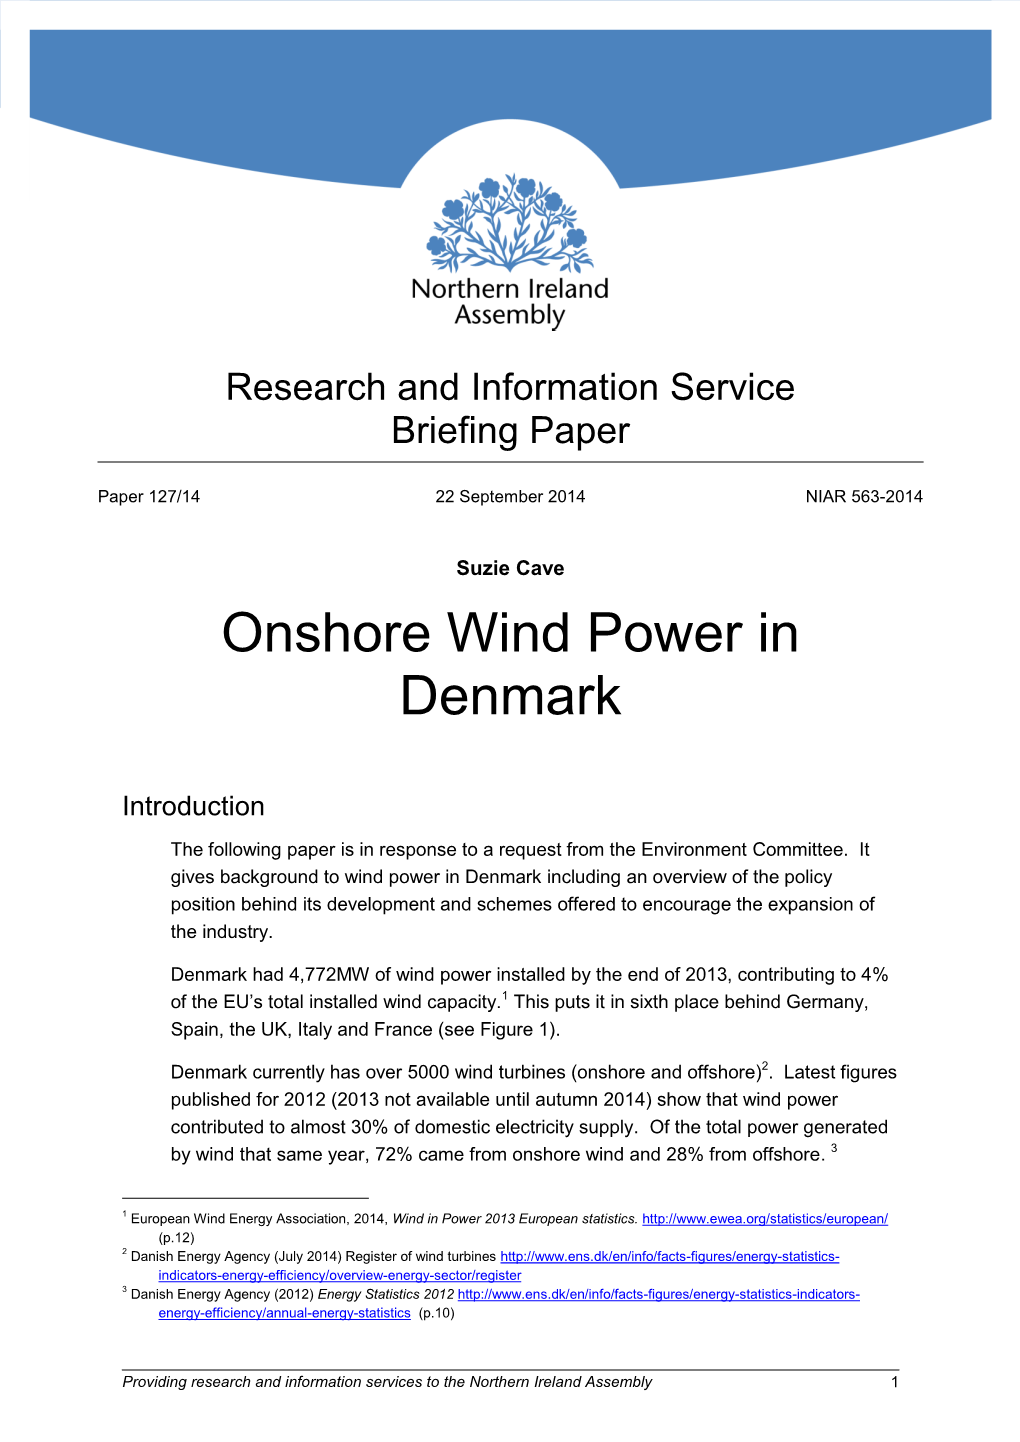 Onshore Wind Power in Denmark